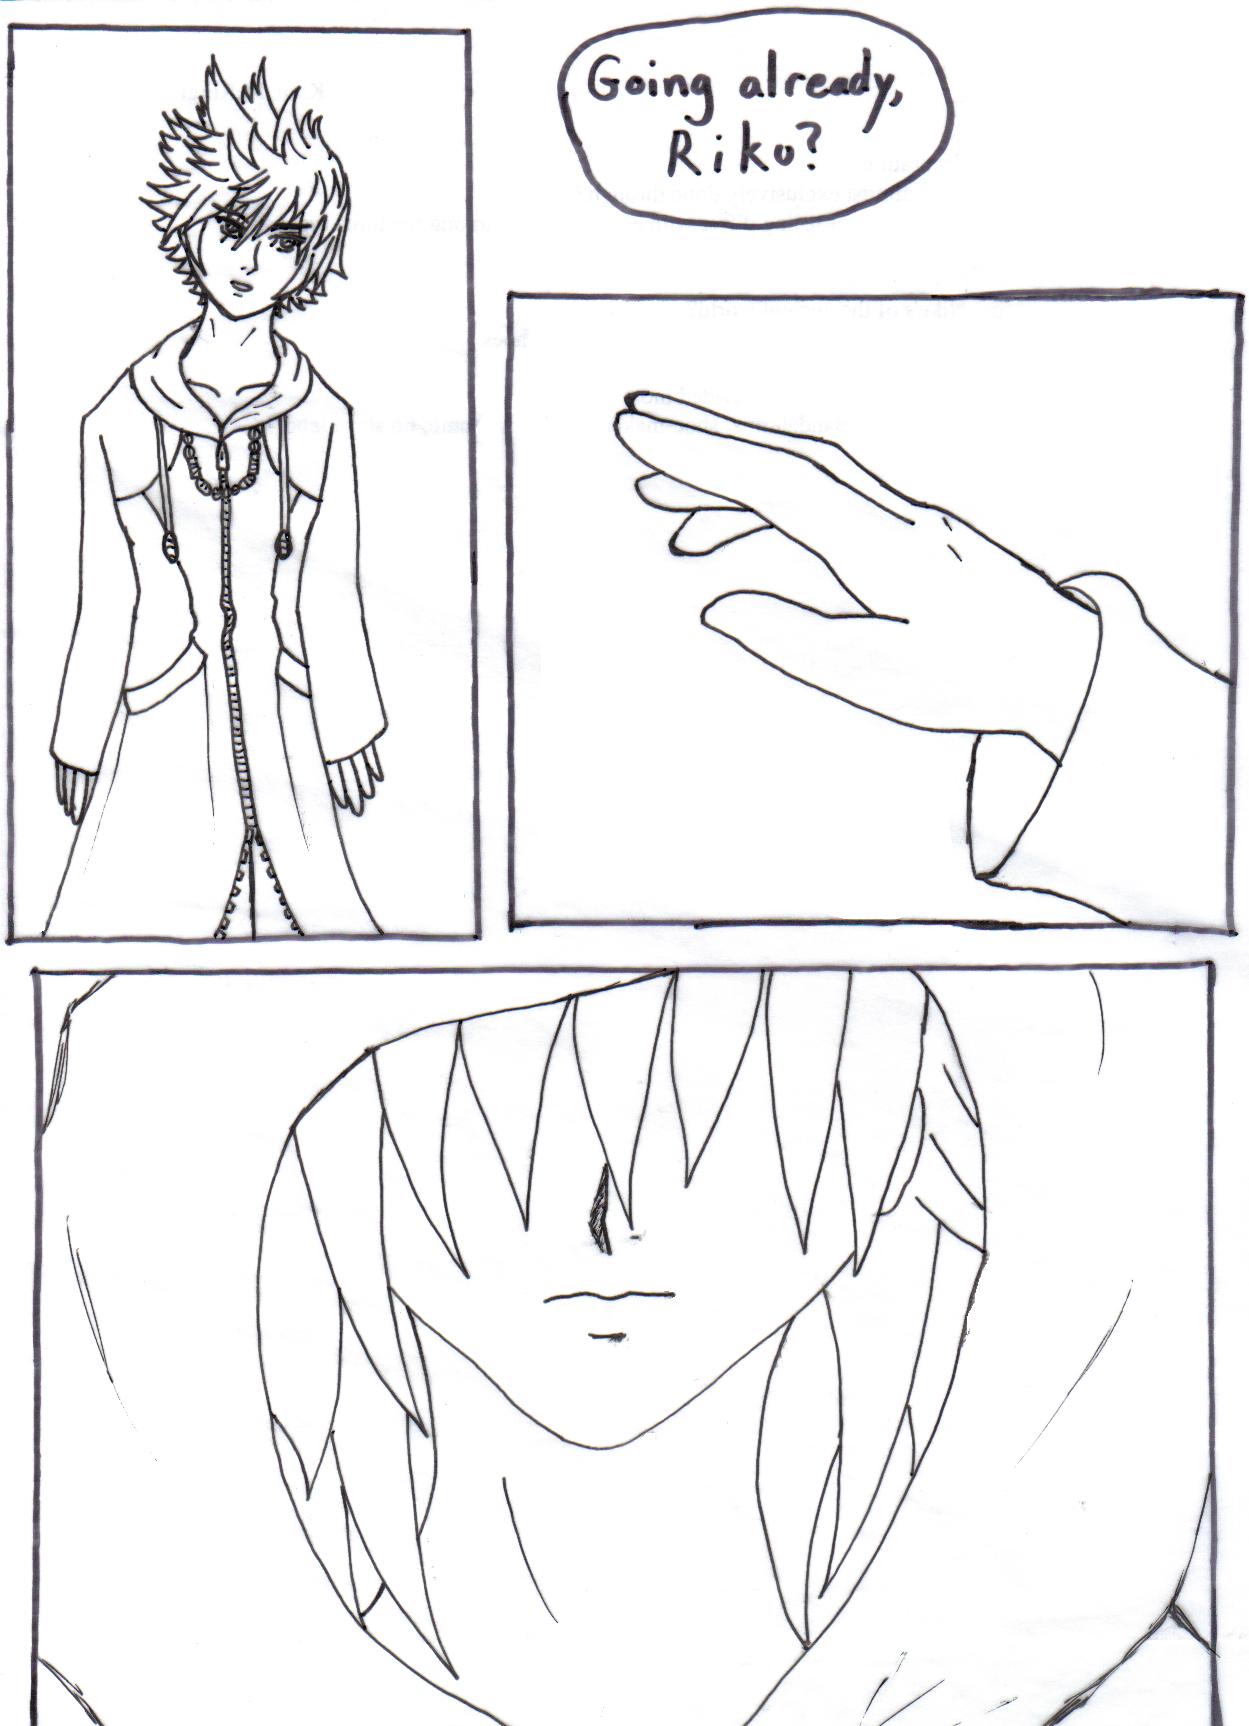 Doujinshi page 1 by Emeraldwolf